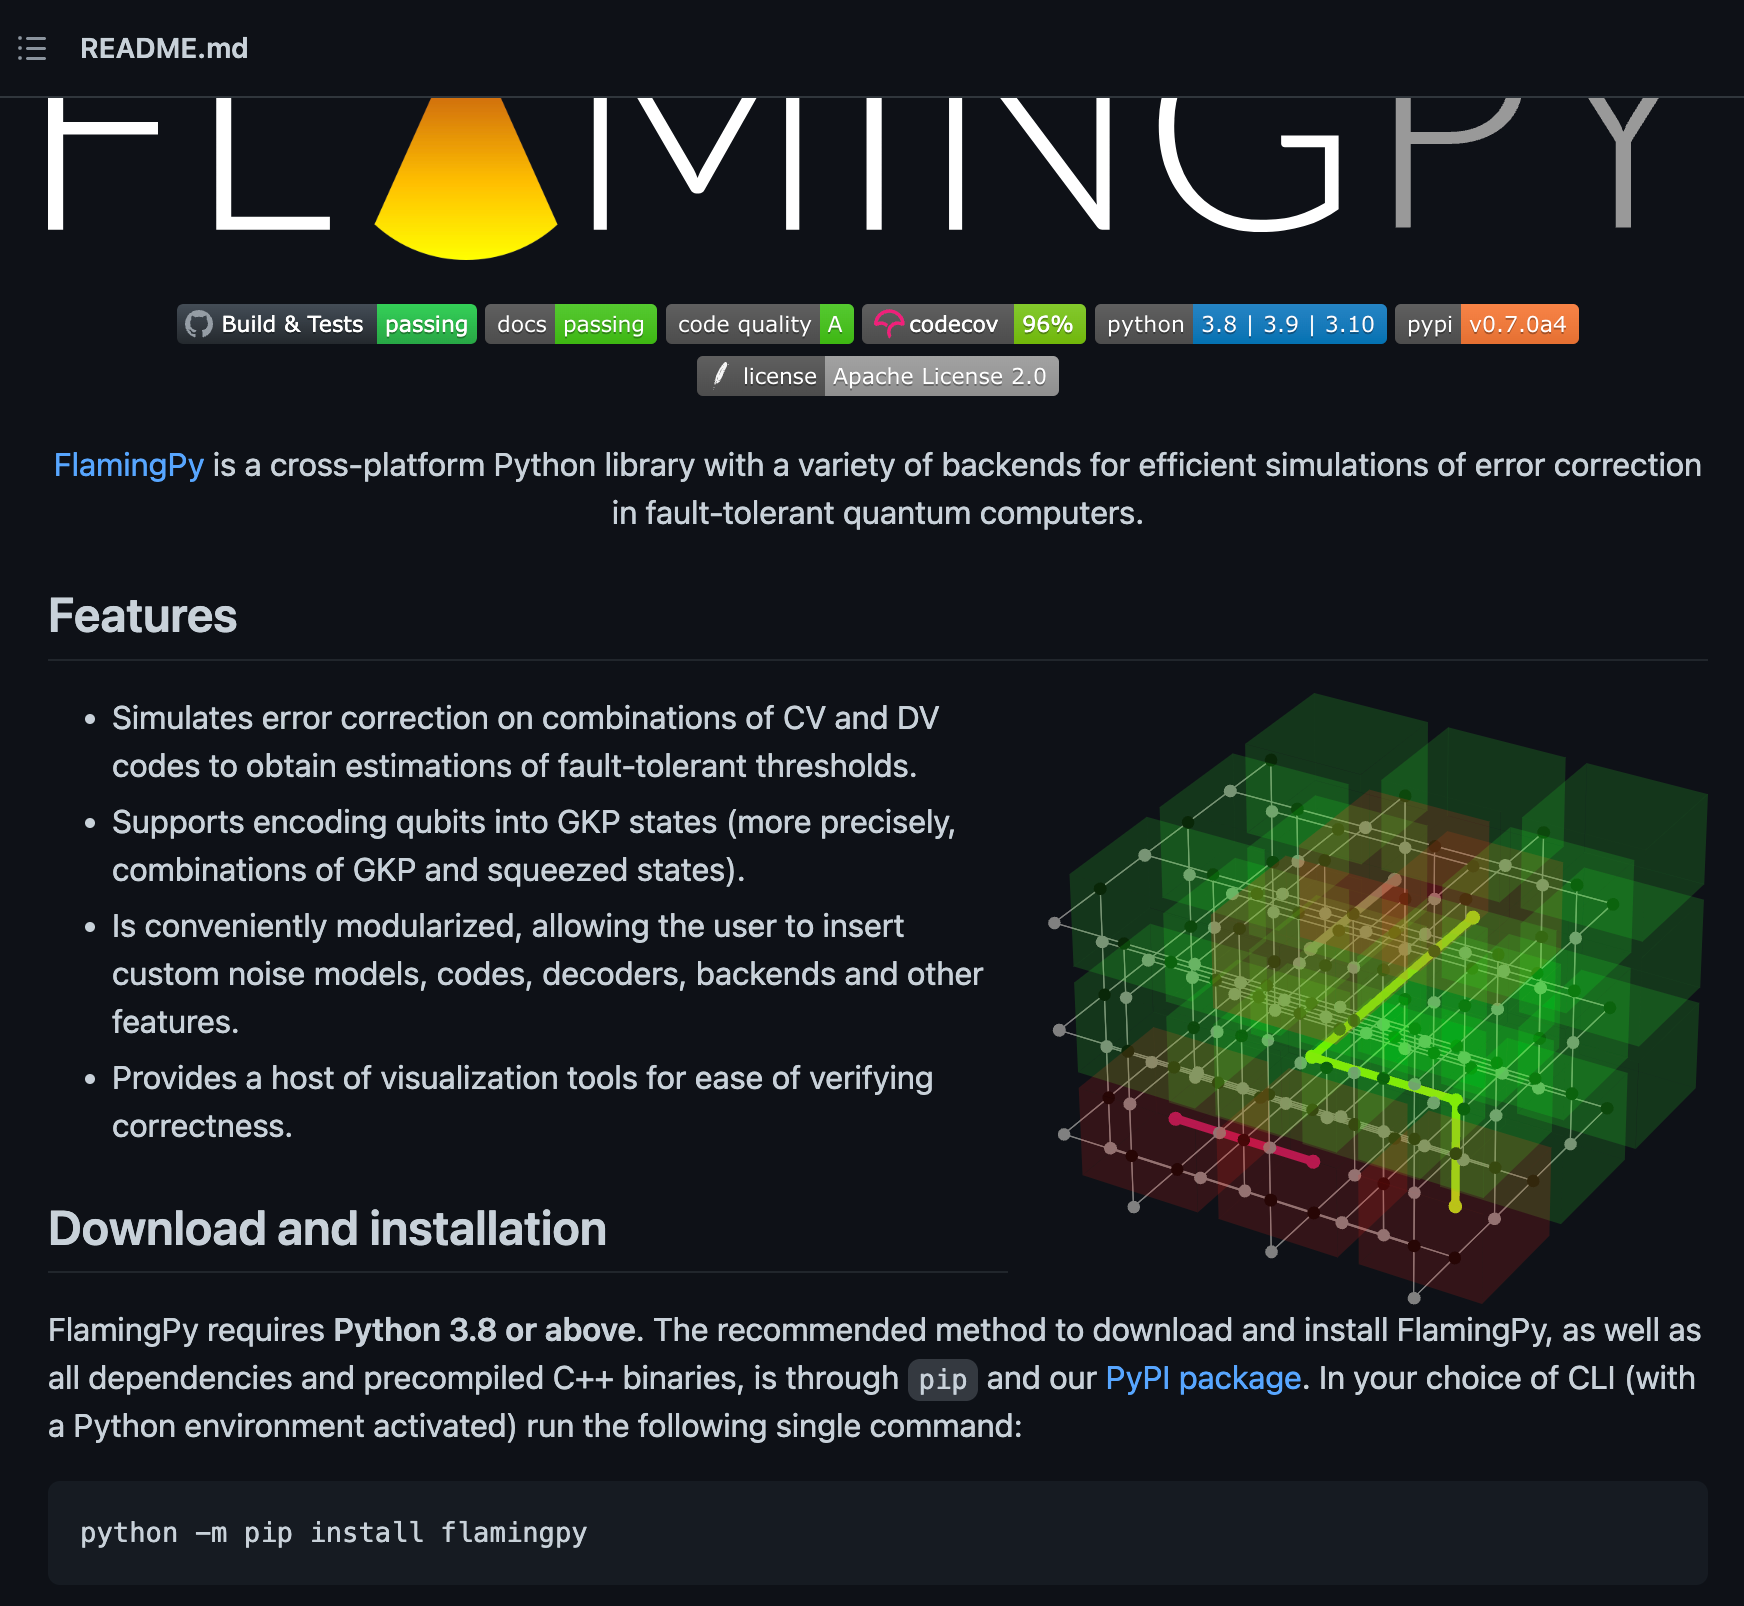 Xanadu Launches Flamingpy, Software To Reduce Errors In Quantum Qubits